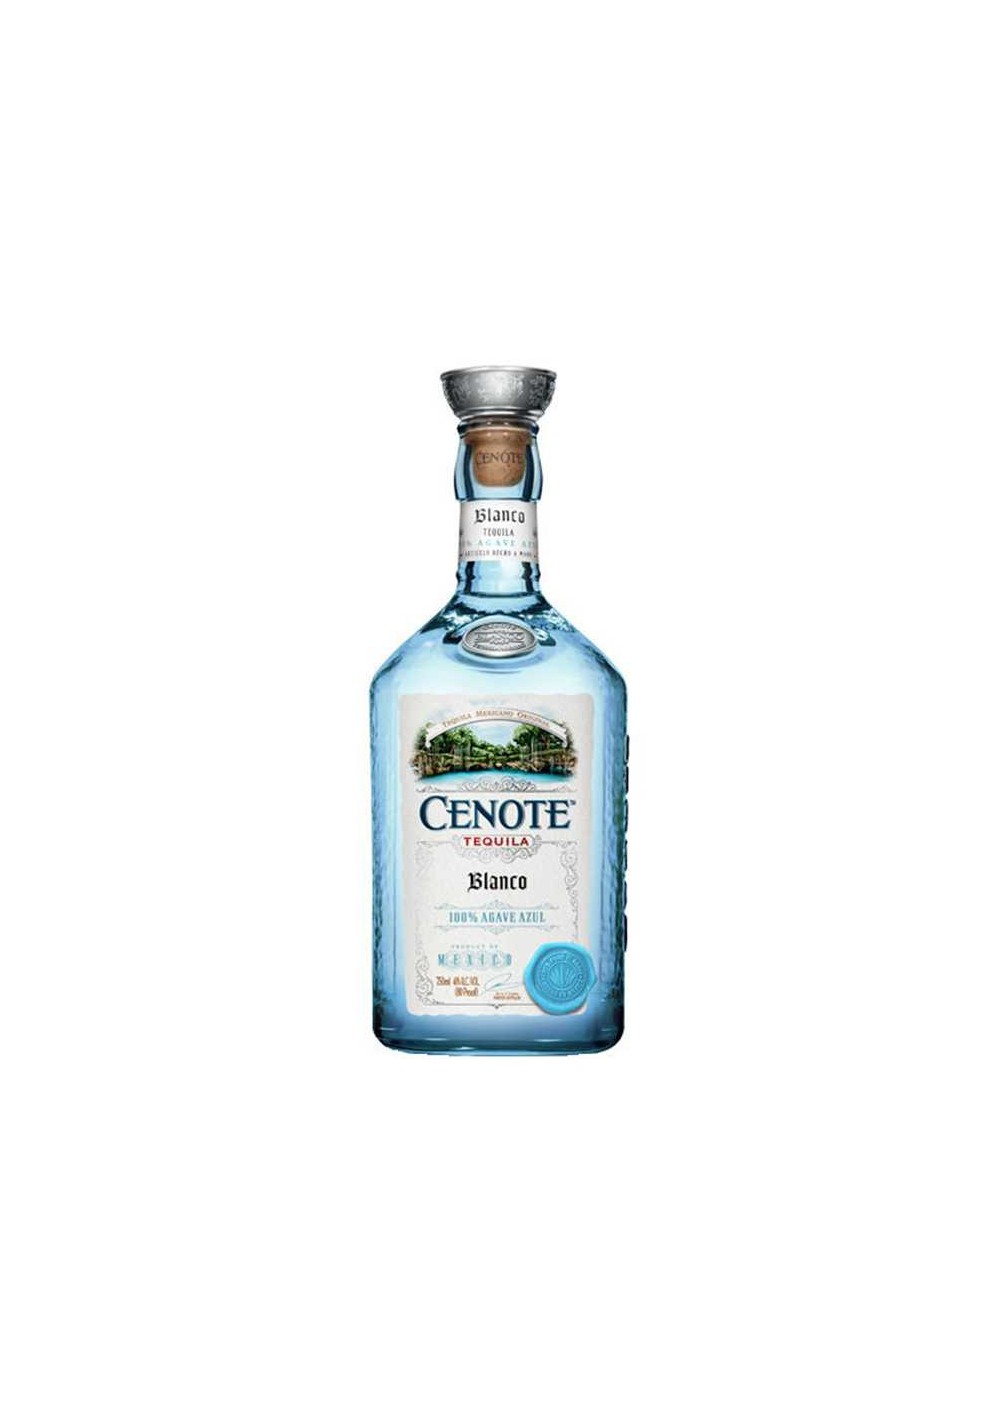 Cenote - Tequila Blanco - (70cl)